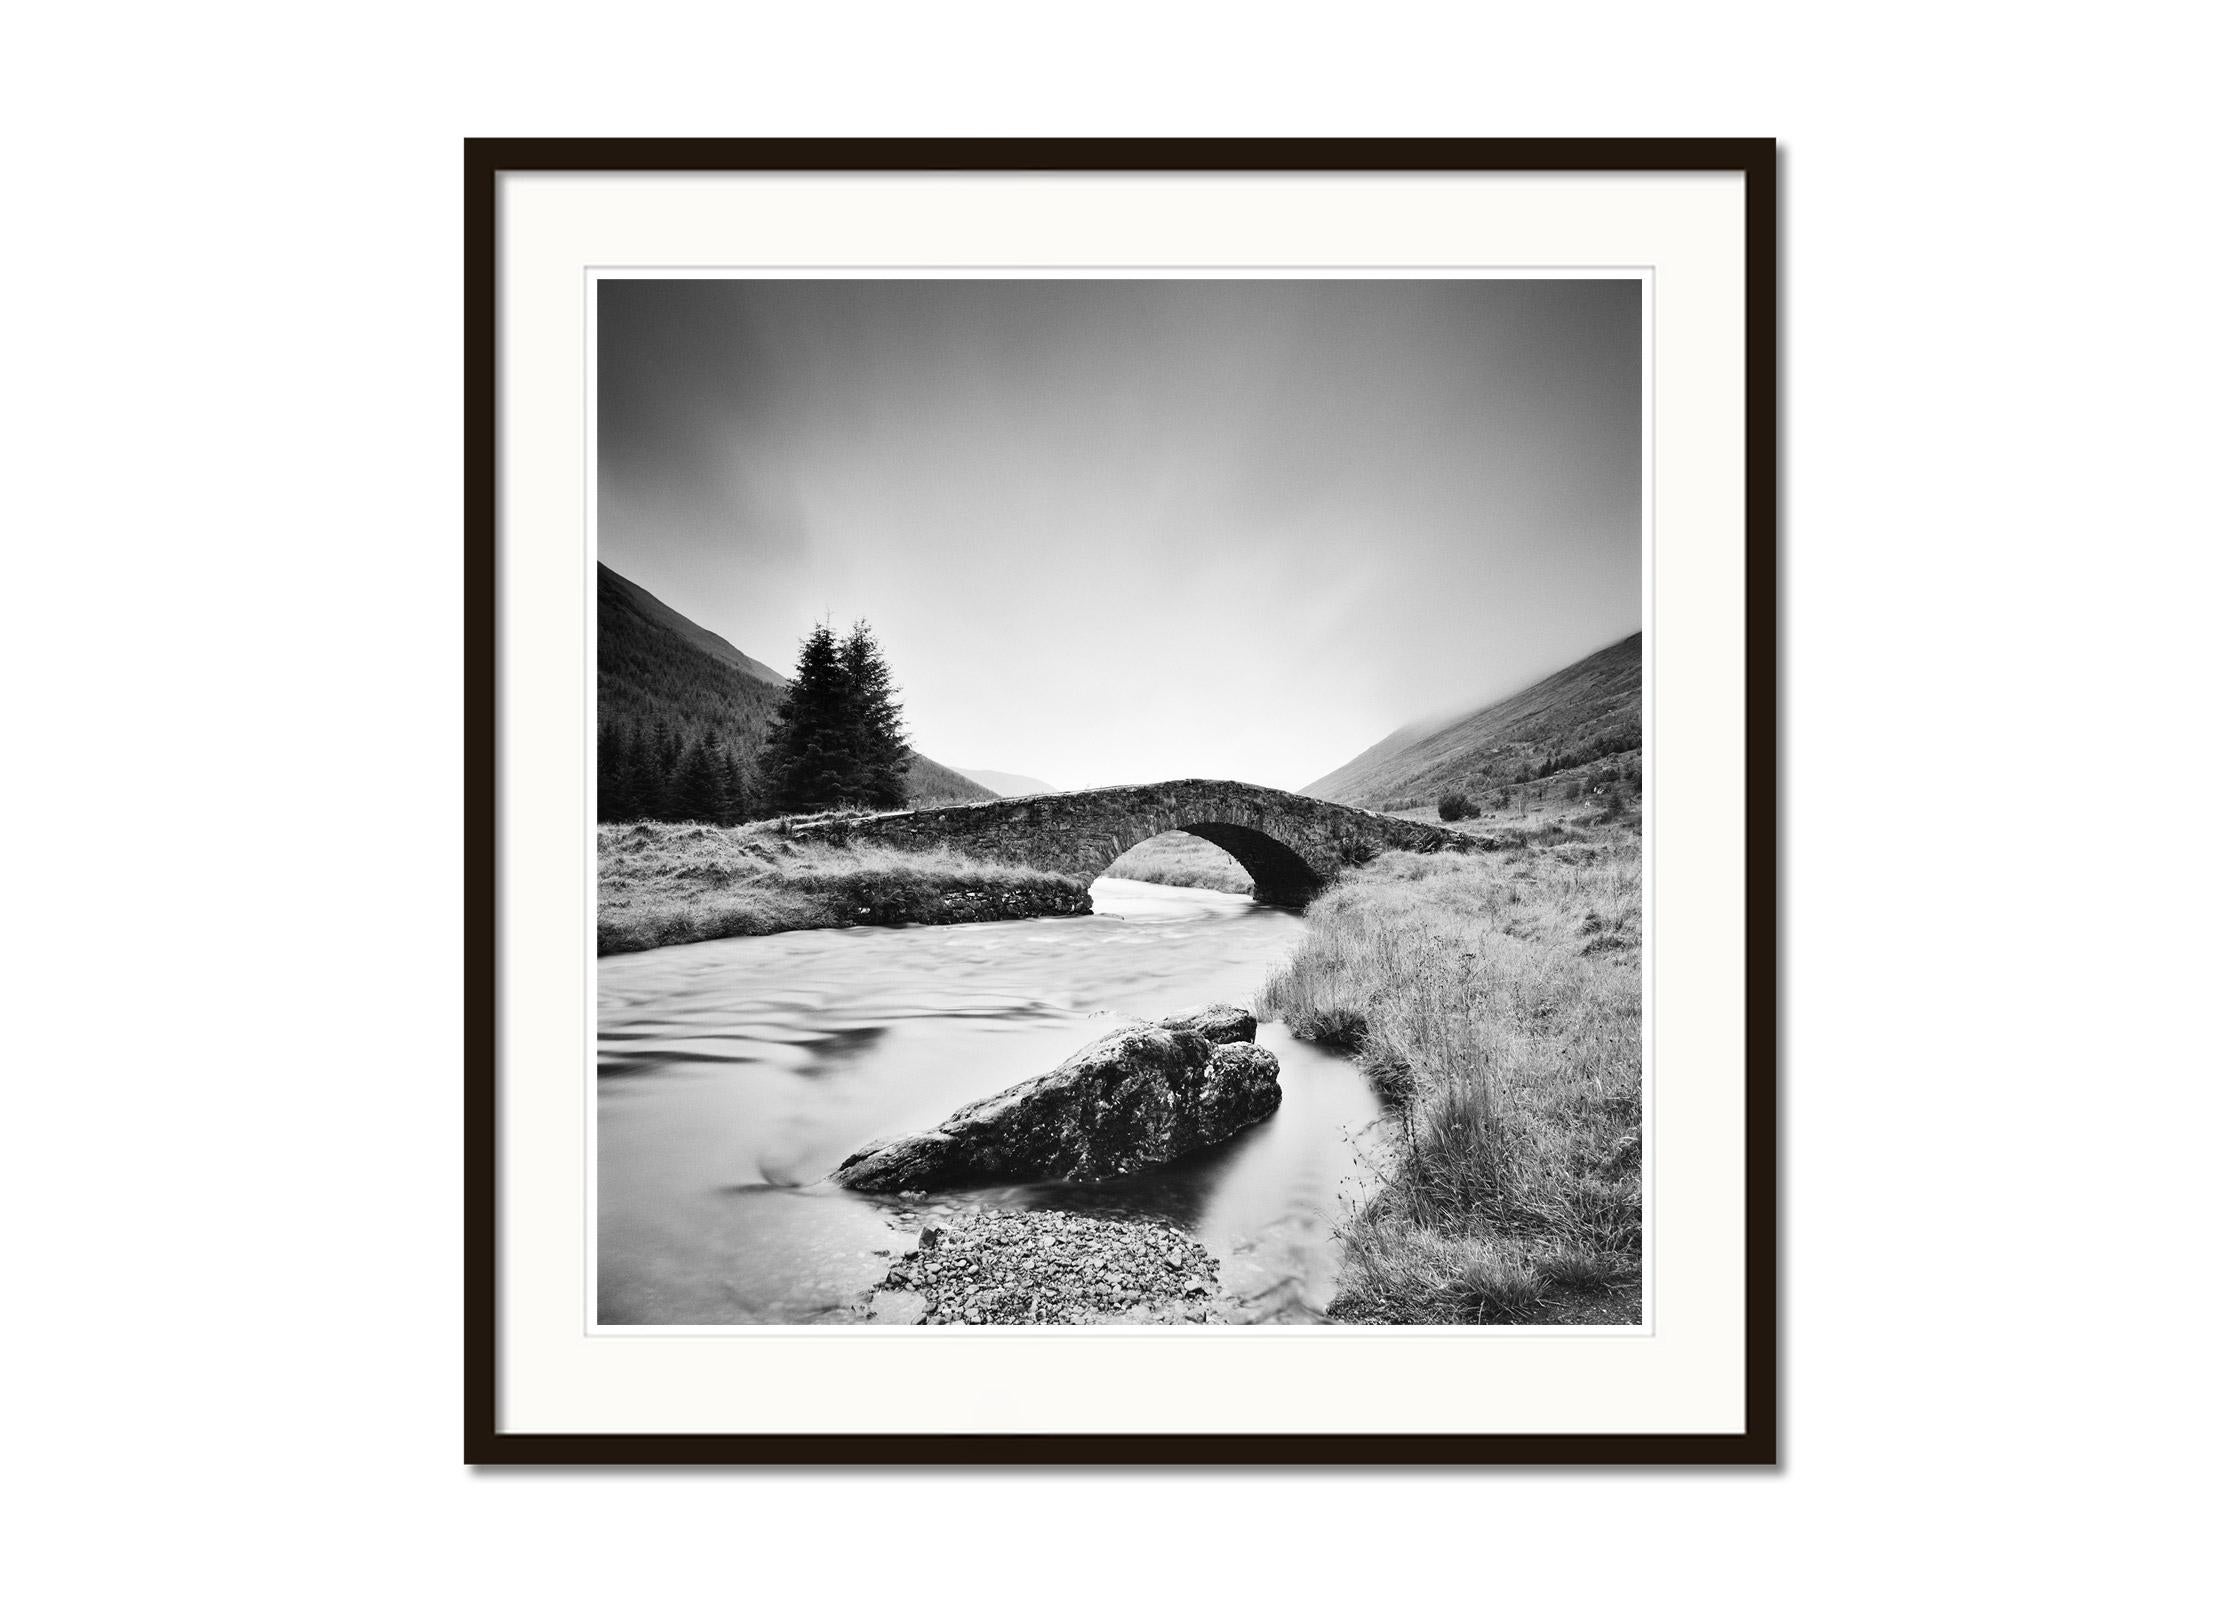 Stone Bridge, Highlands, Scotland, black and white art photography, landscape - Gray Landscape Photograph by Gerald Berghammer, Ina Forstinger